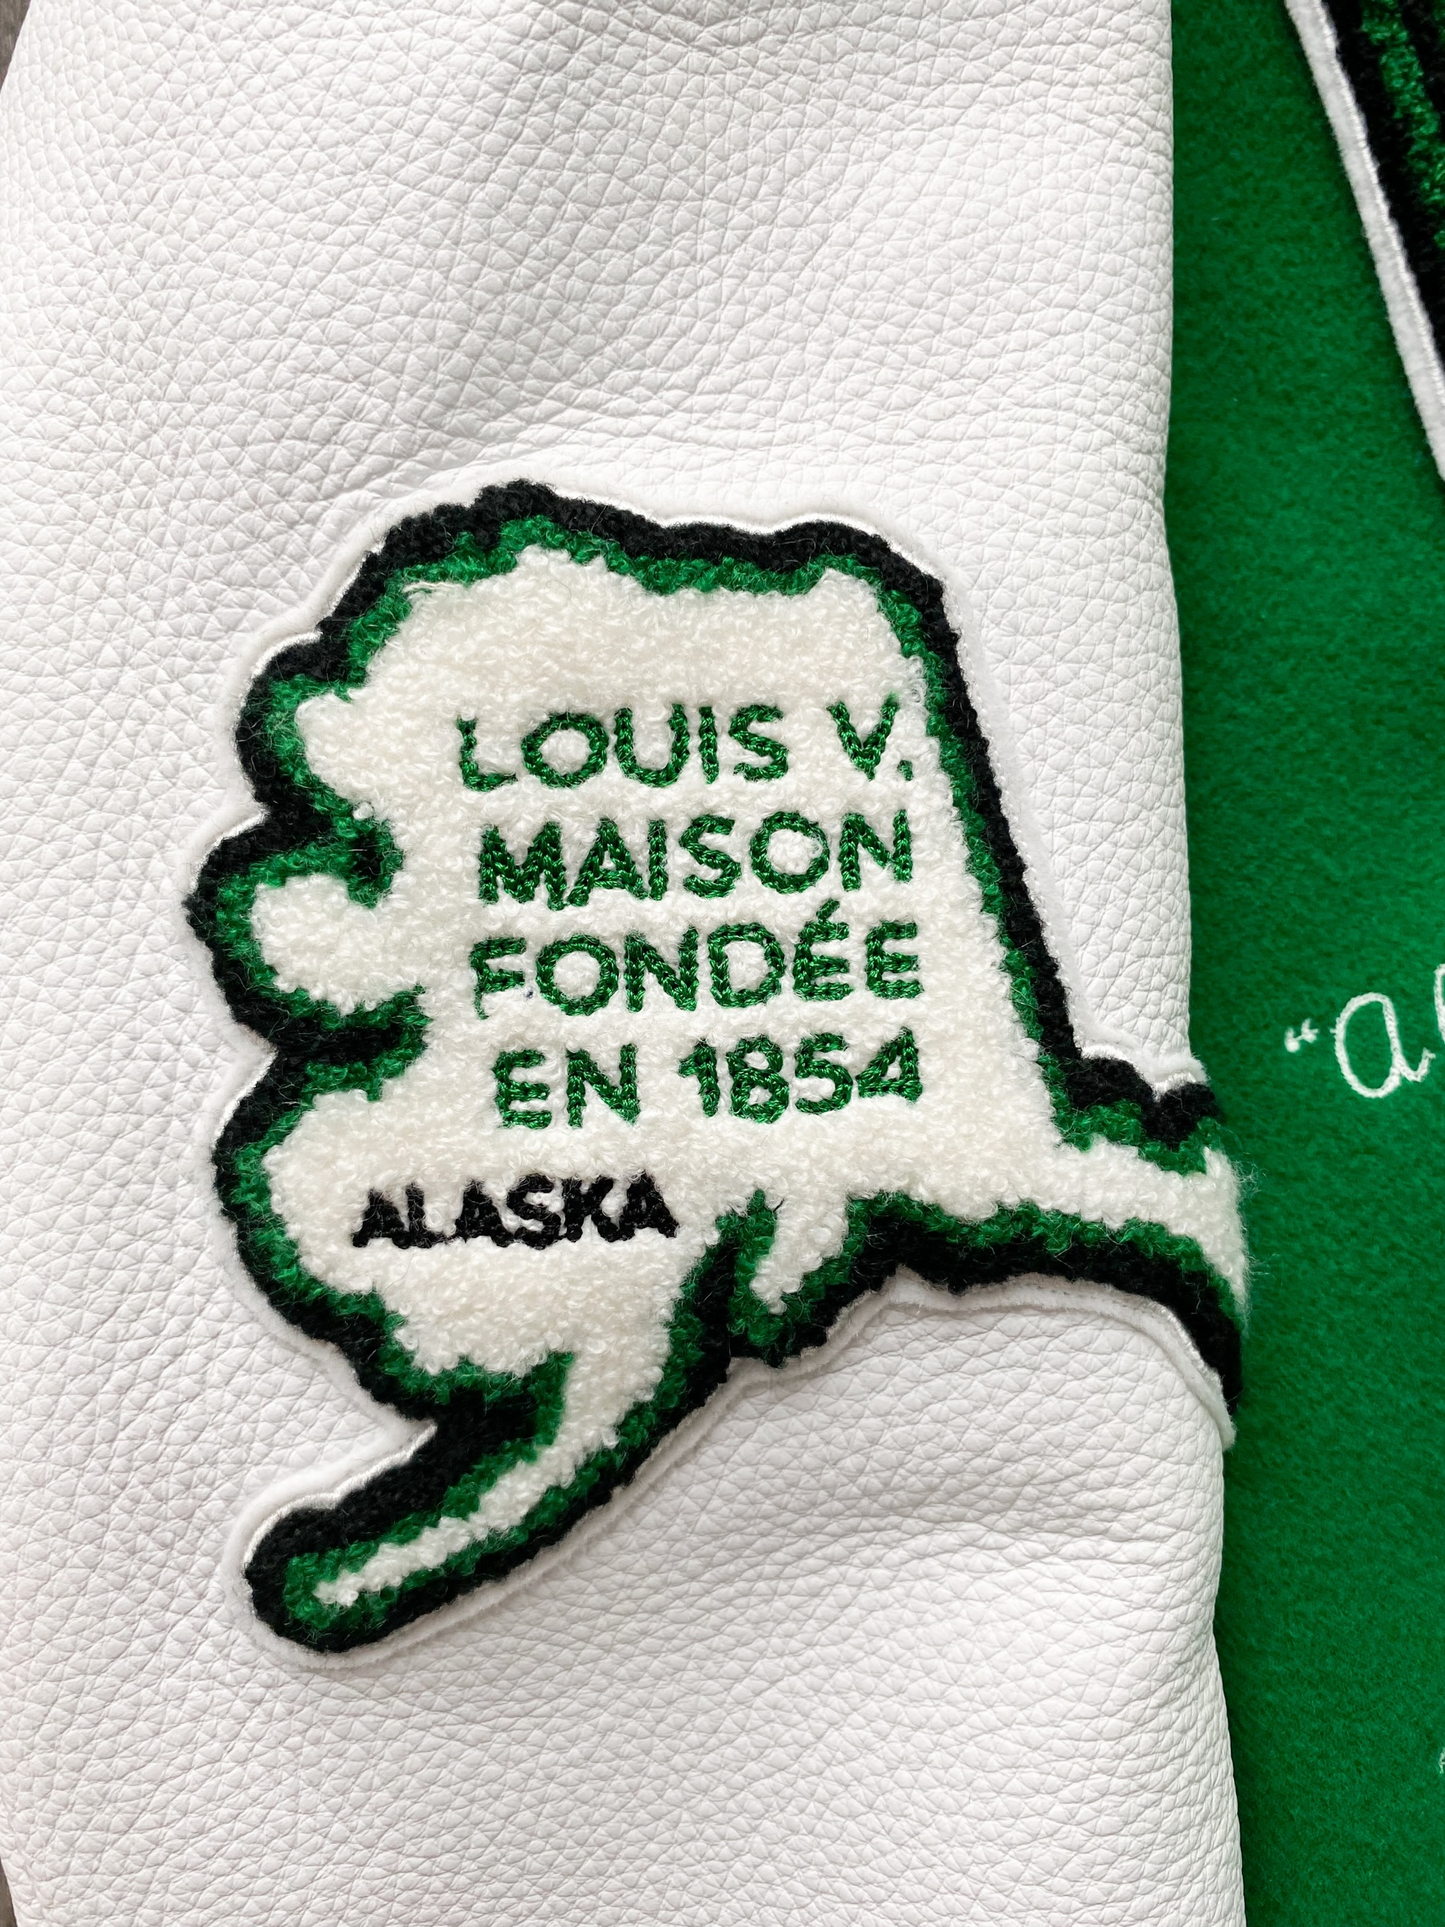 Buy Louis Vuitton 22SS Leather Embroidered Varsity Jacket Stadium